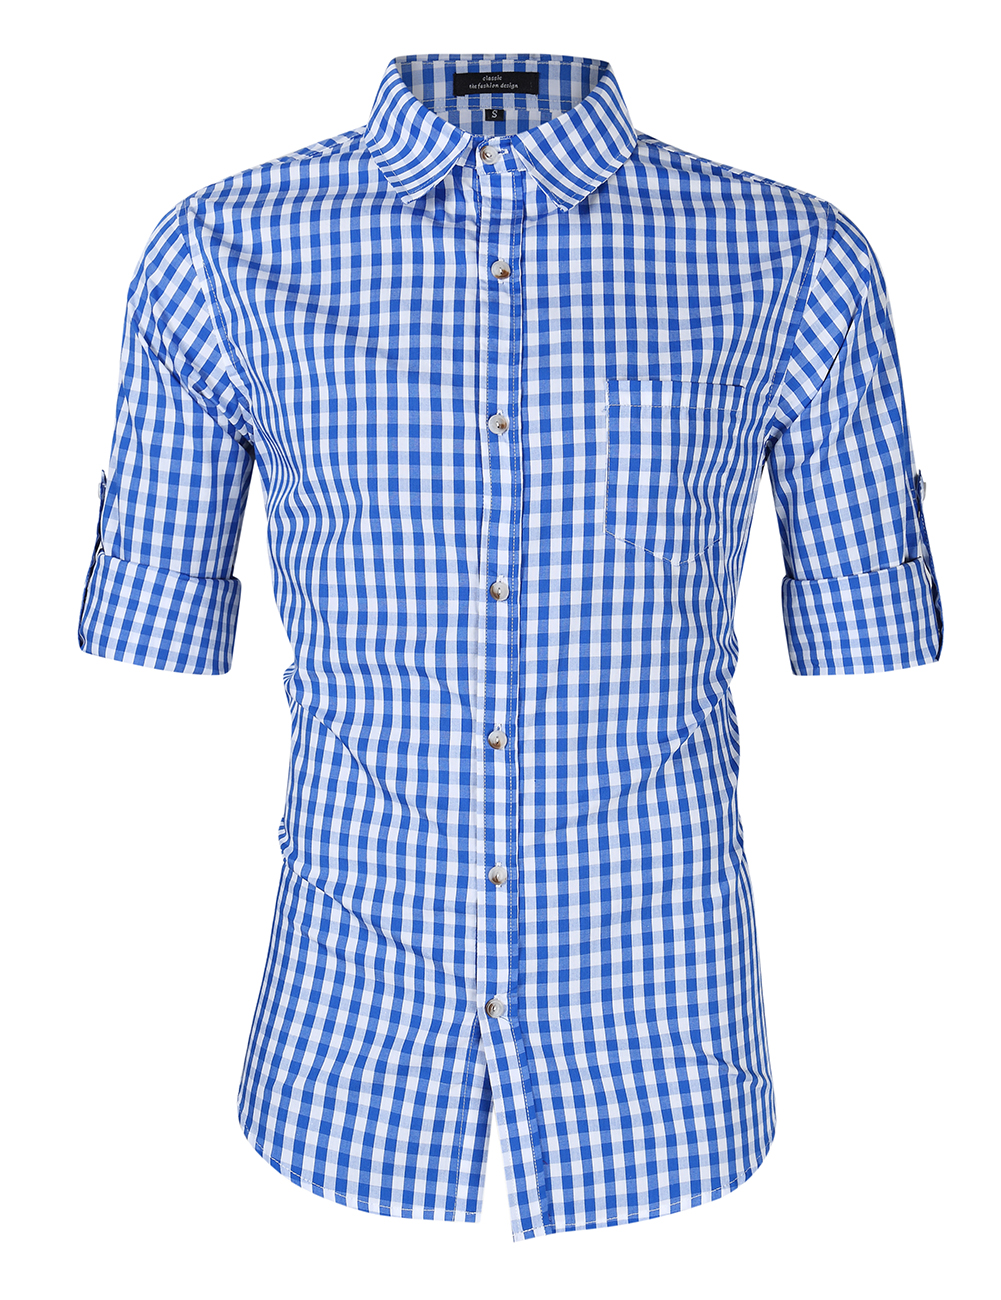 [US Direct] Men's Oktoberfest Costumes Long Sleeve Shirt Fashion Plaid Front Pocket Classical Shirt Tops